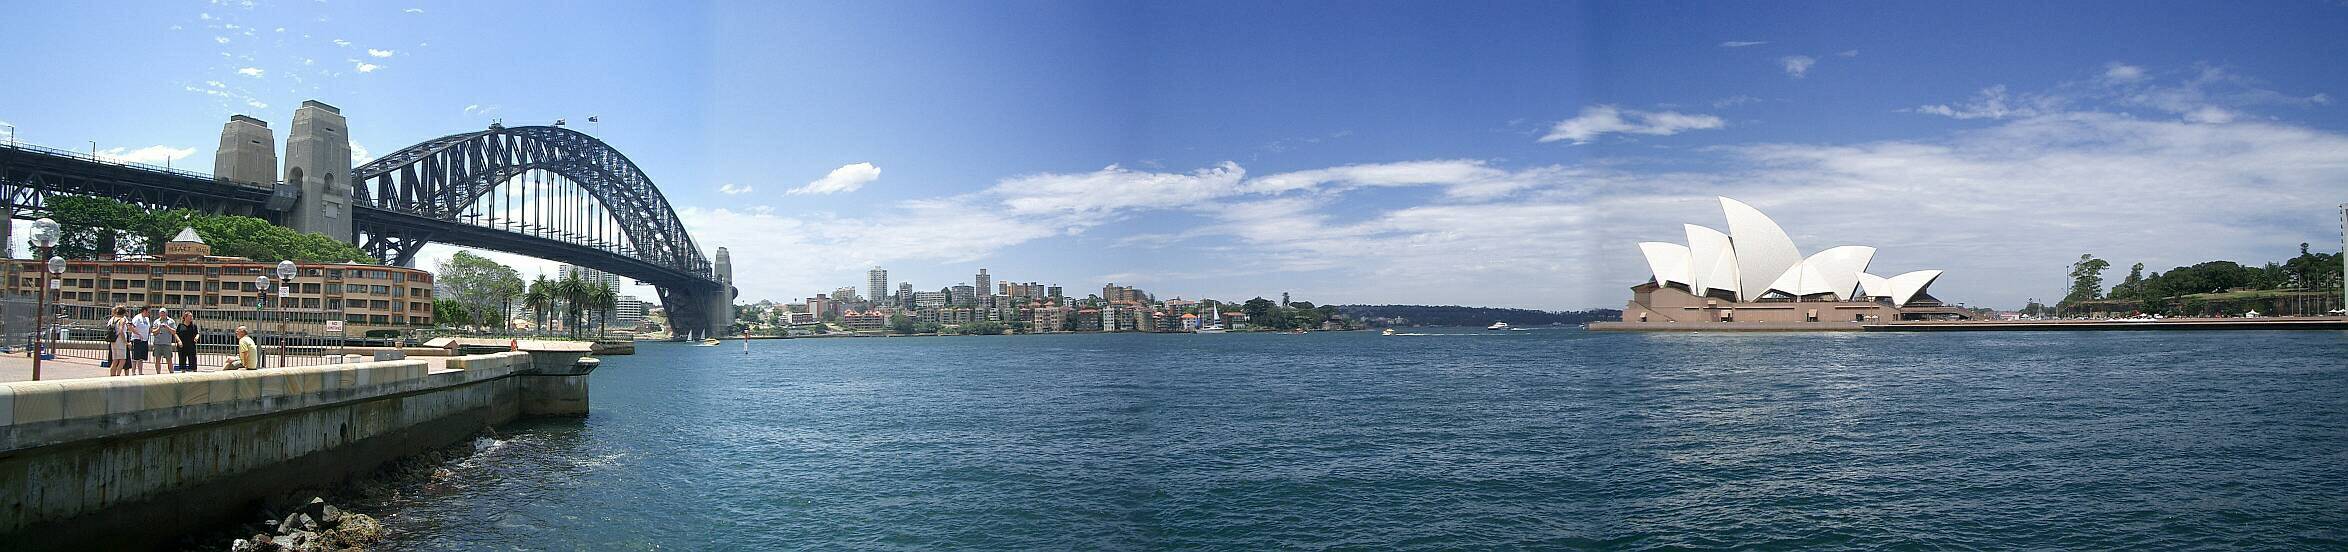 Panorama_Sydney